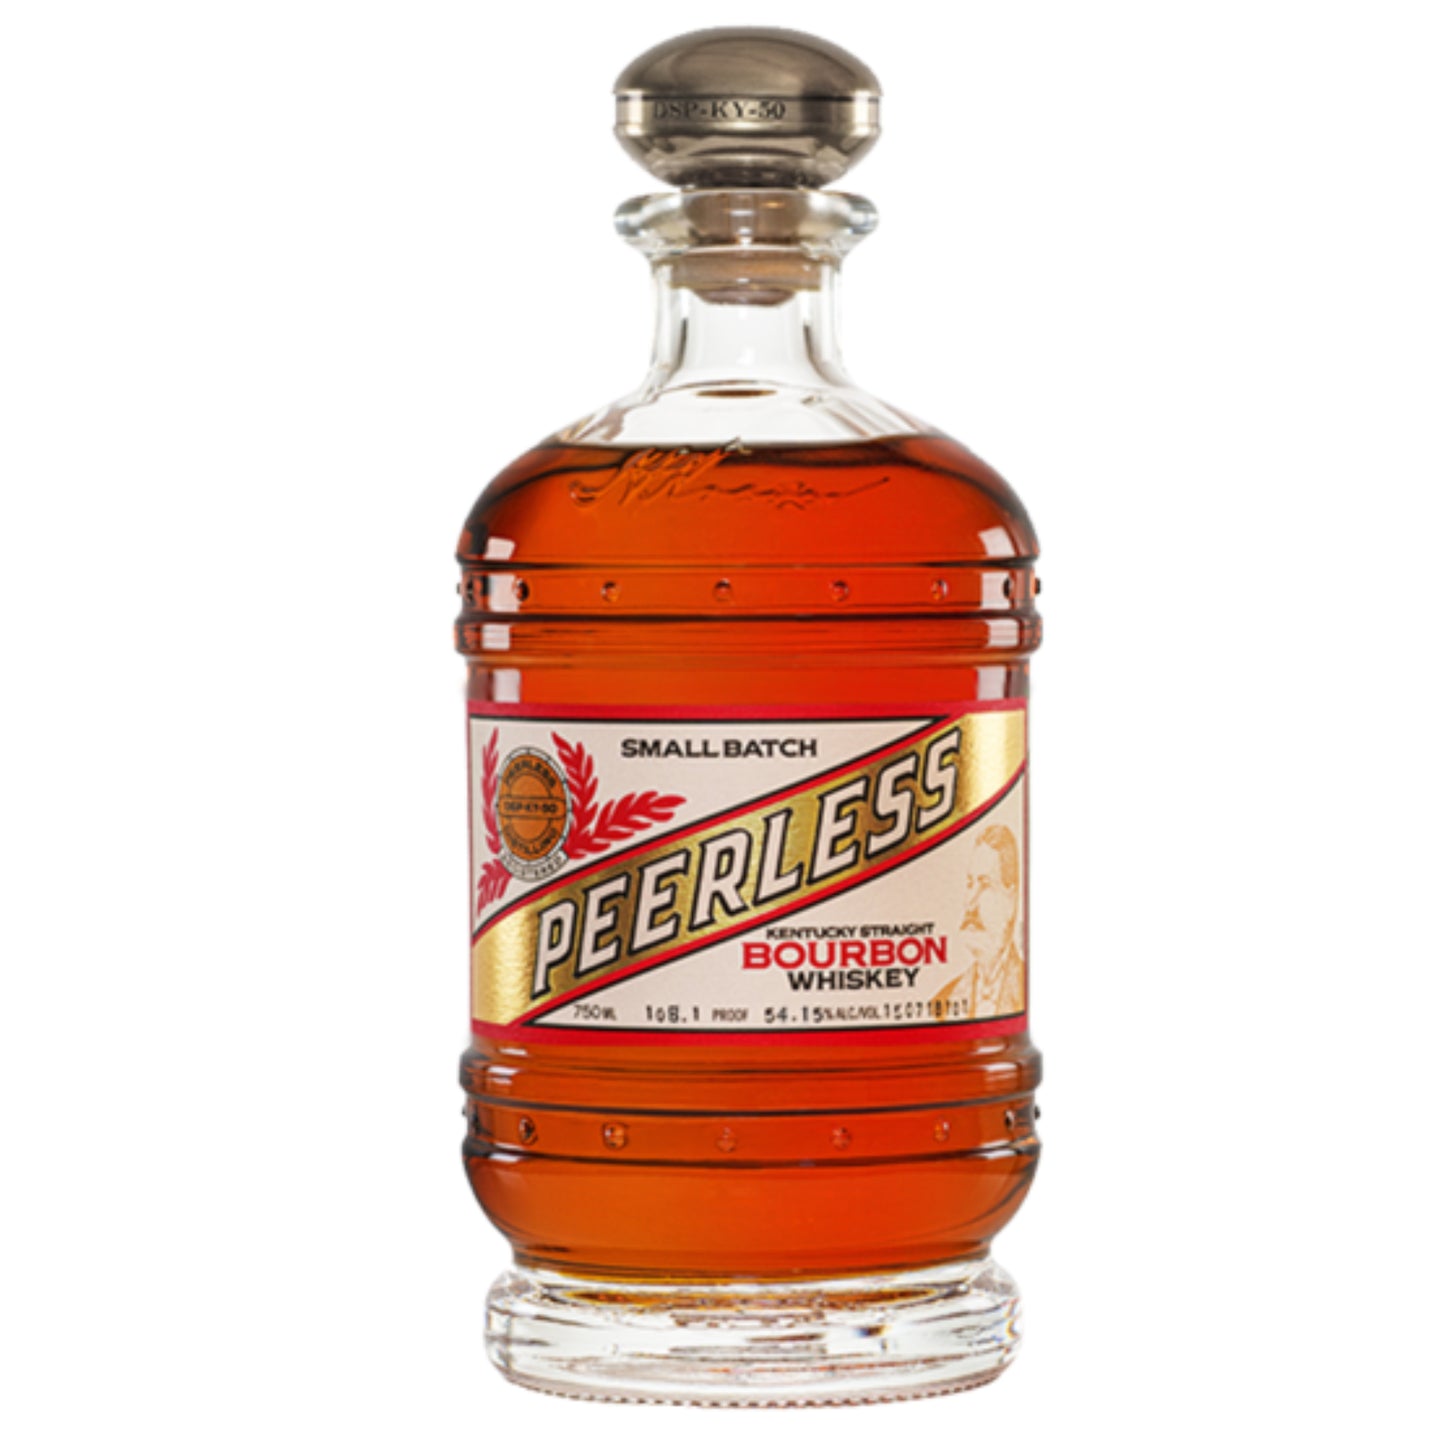 Peerless Kentucky Straight Bourbon - Liquor Geeks